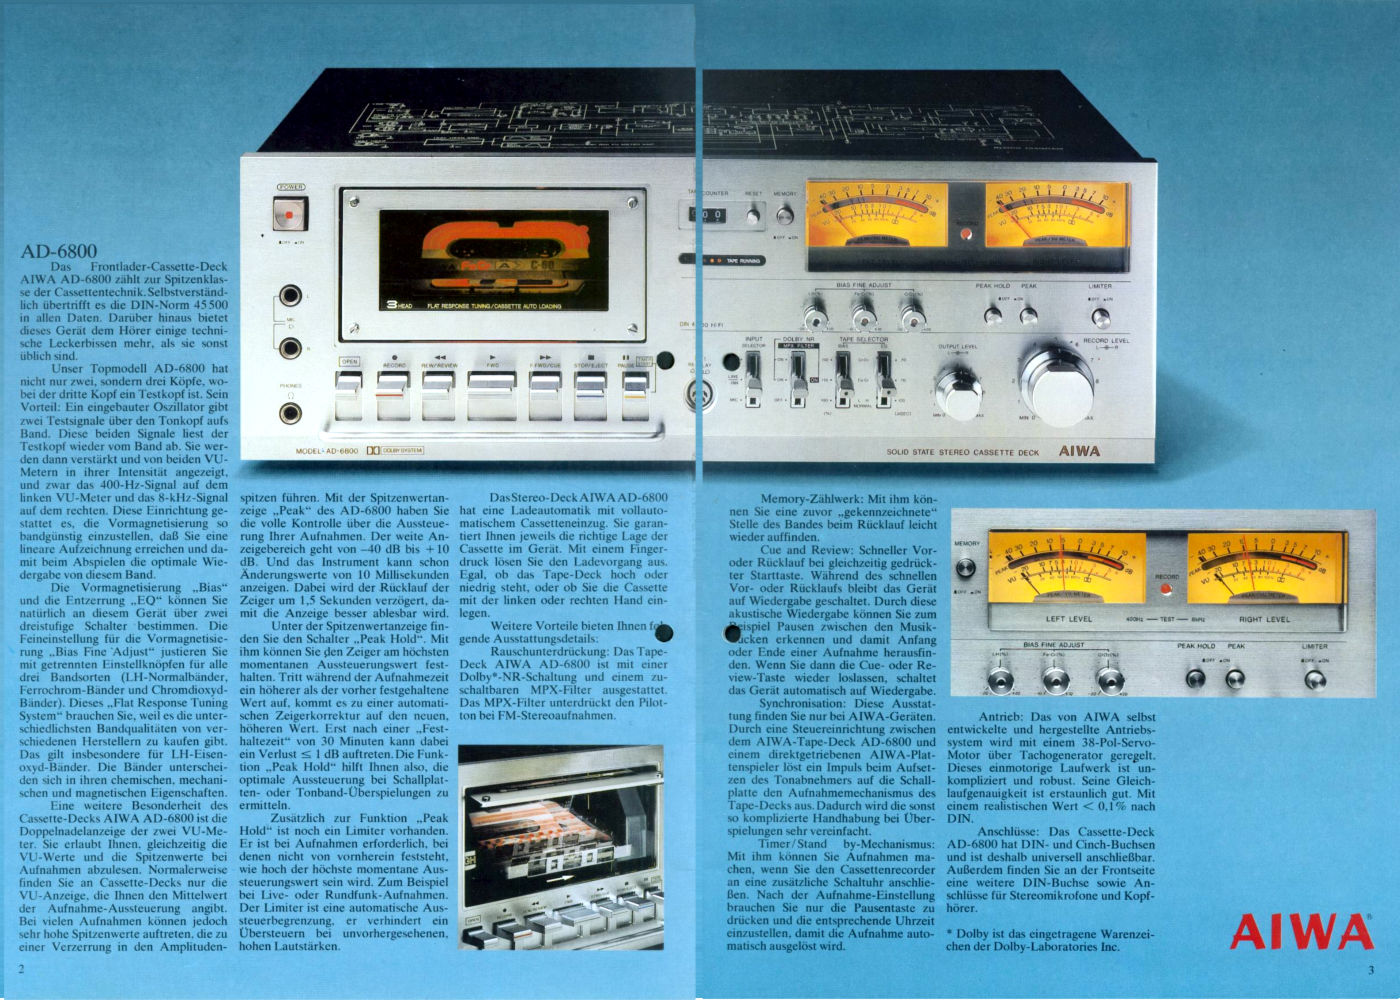 AIWA AD-6800 cassette deck